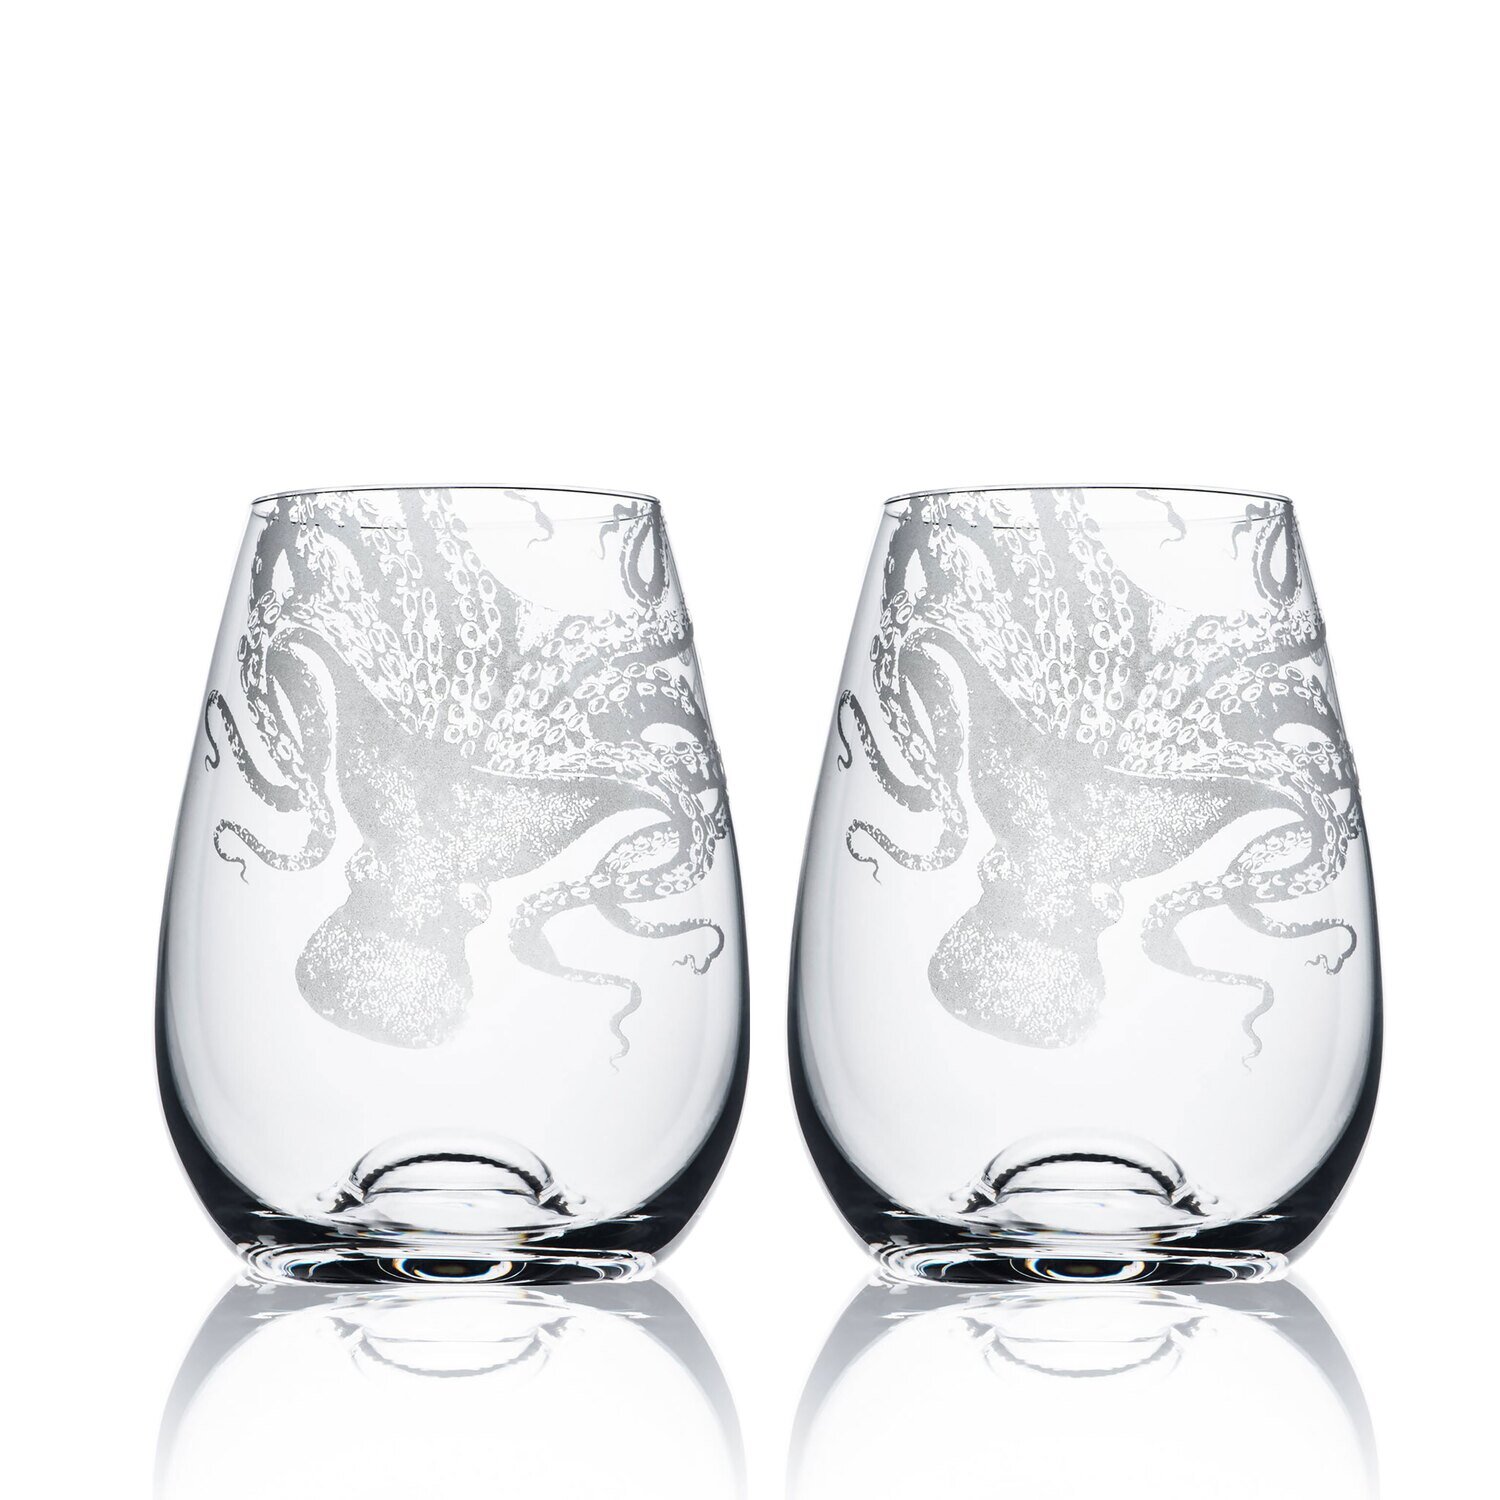 Caskata Lucy Stemless Wine Glasses Set of 2 GL-NOSTEMWINE-380